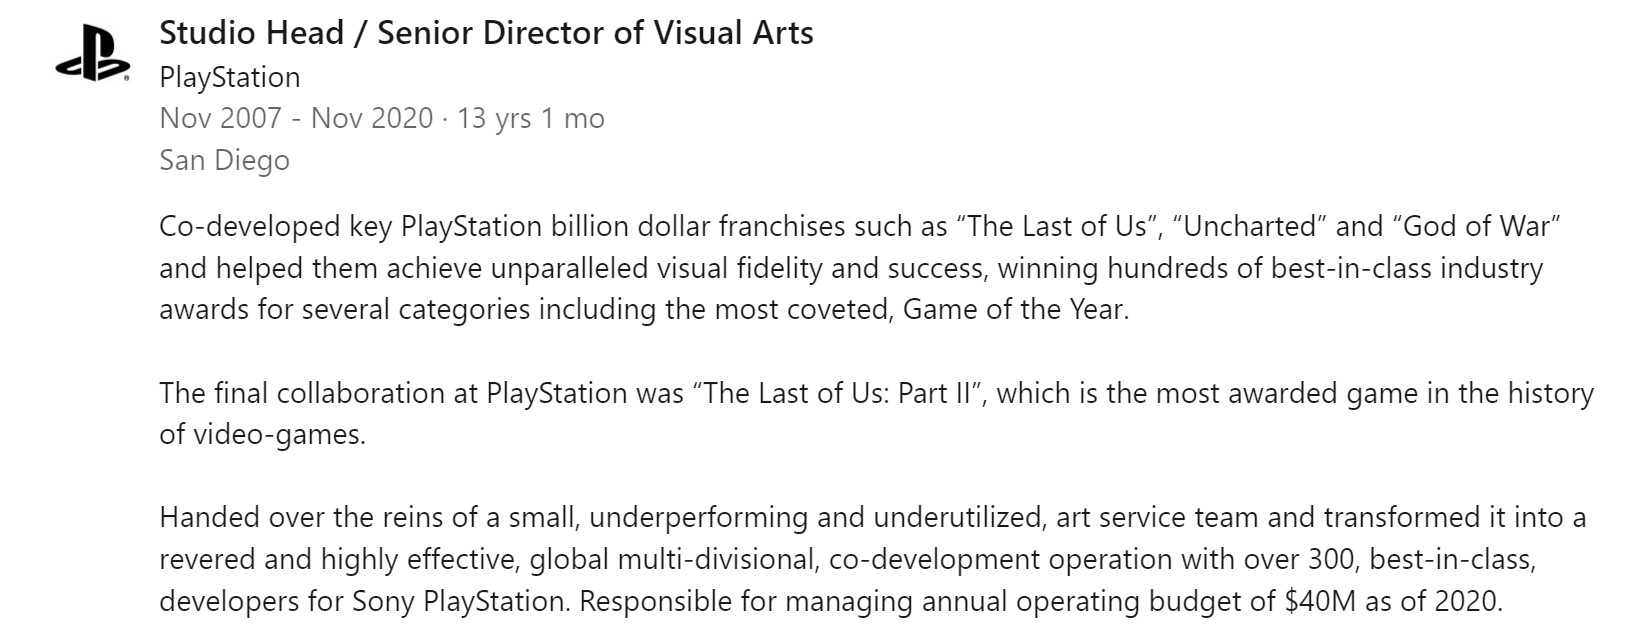 The Last of Us revenue